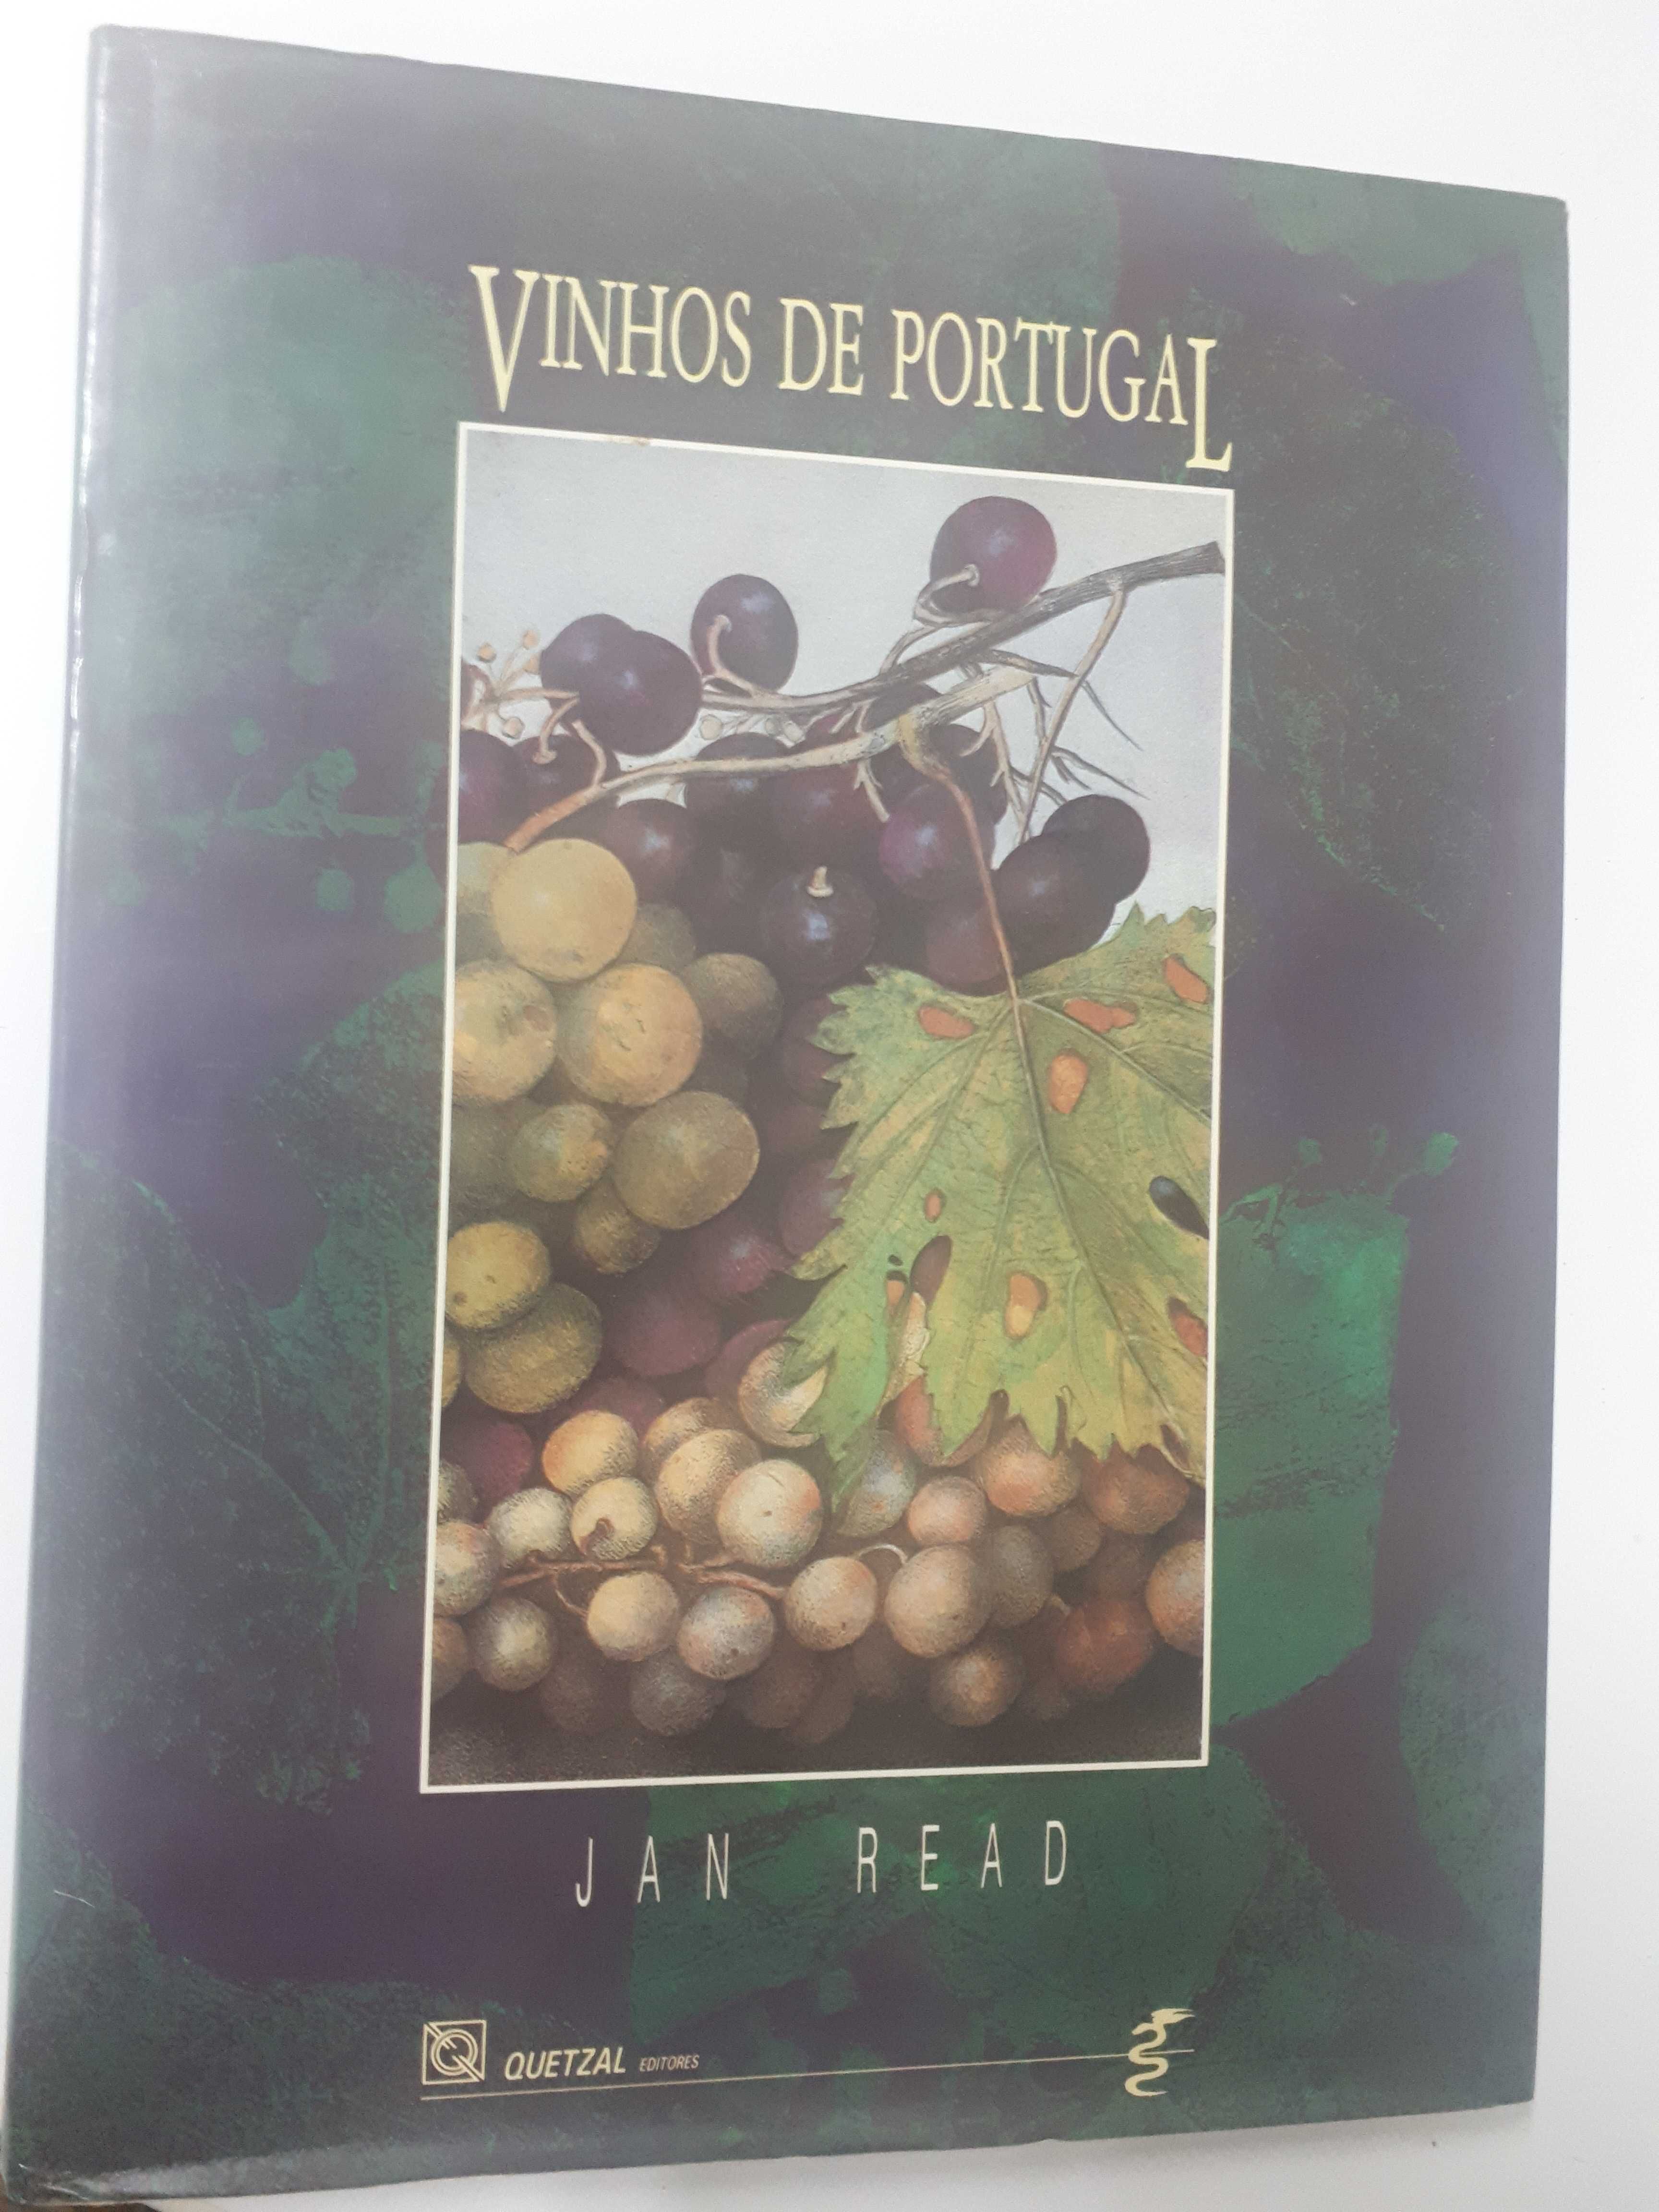 Jean Read - Vinhos de Portugal